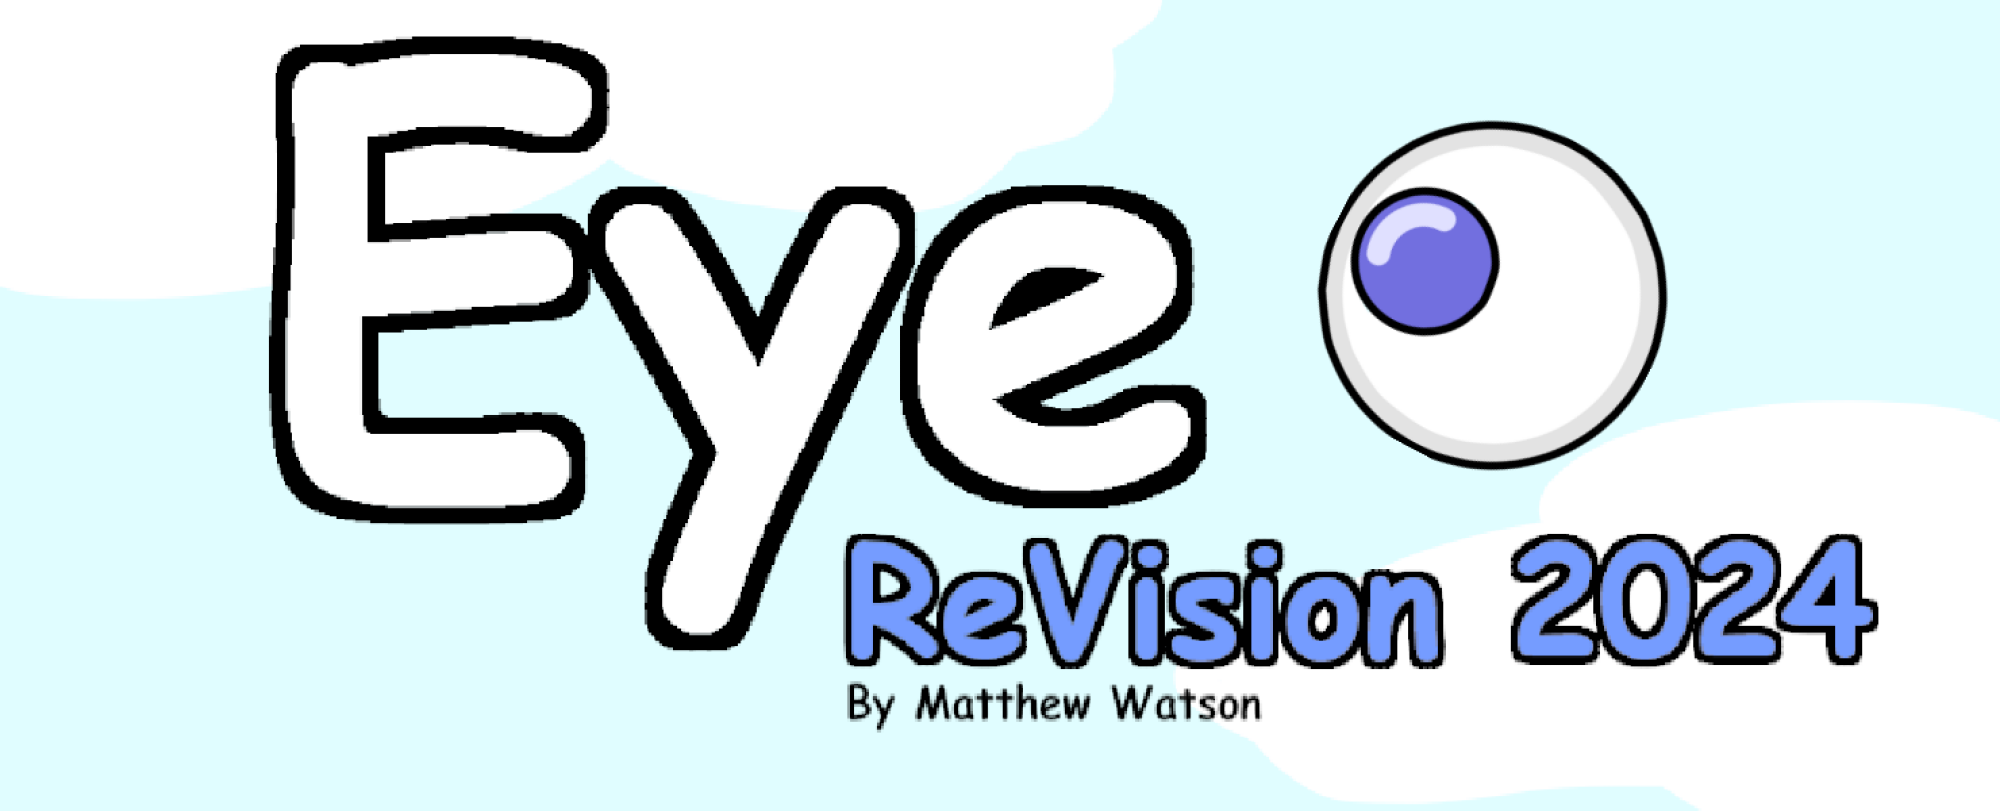 Eye: ReVision 2024